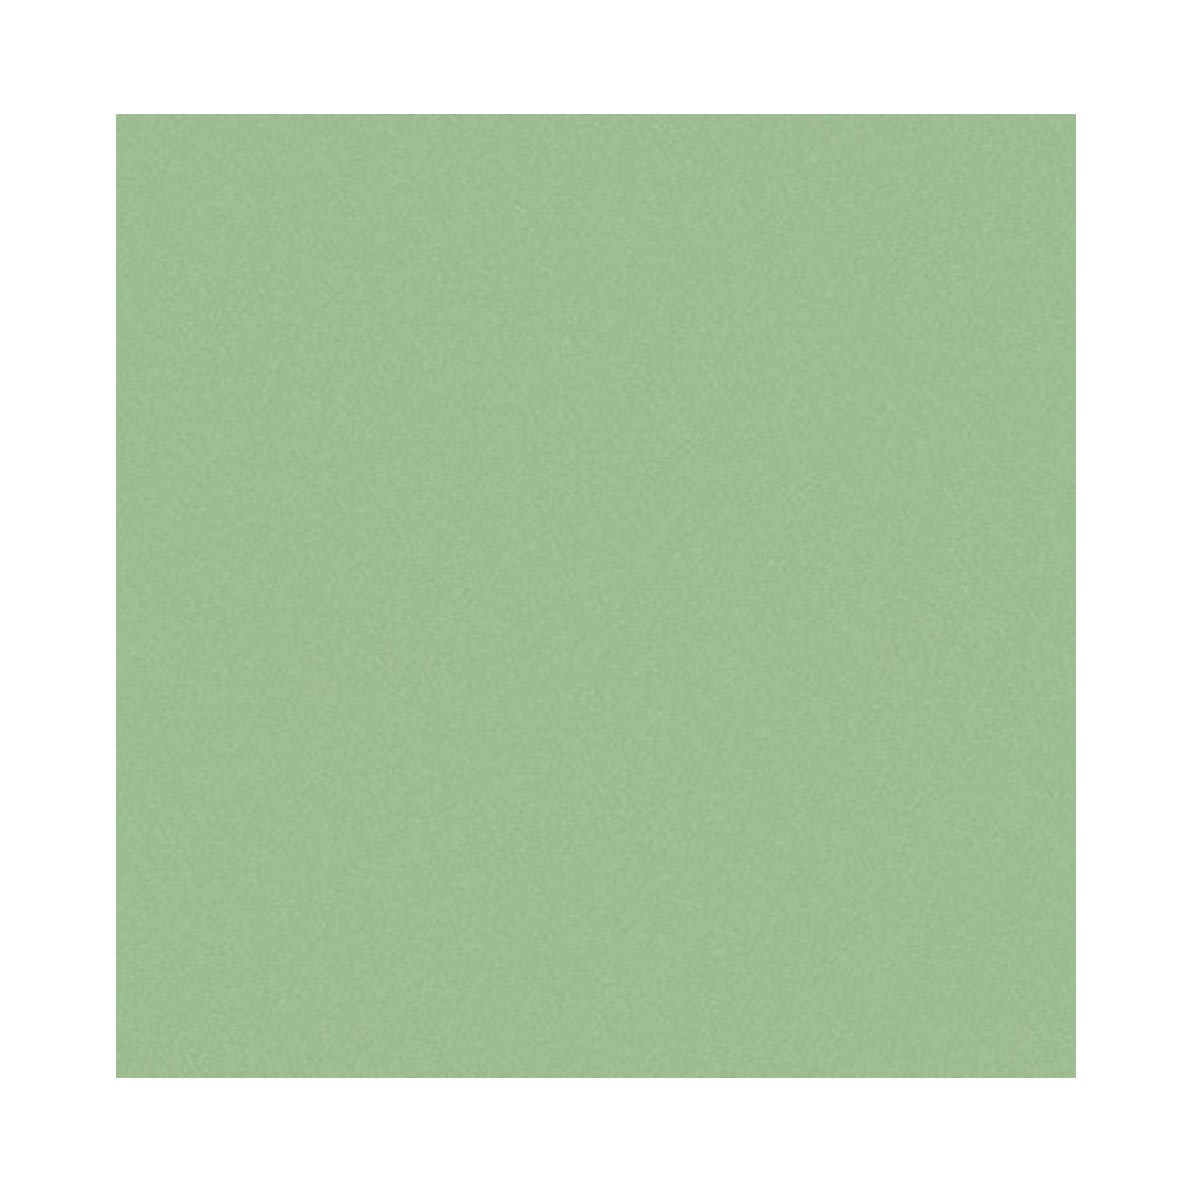 Clairefontaine Pastelmat - Light Green 50 cm x 70 cm, 360 gsm